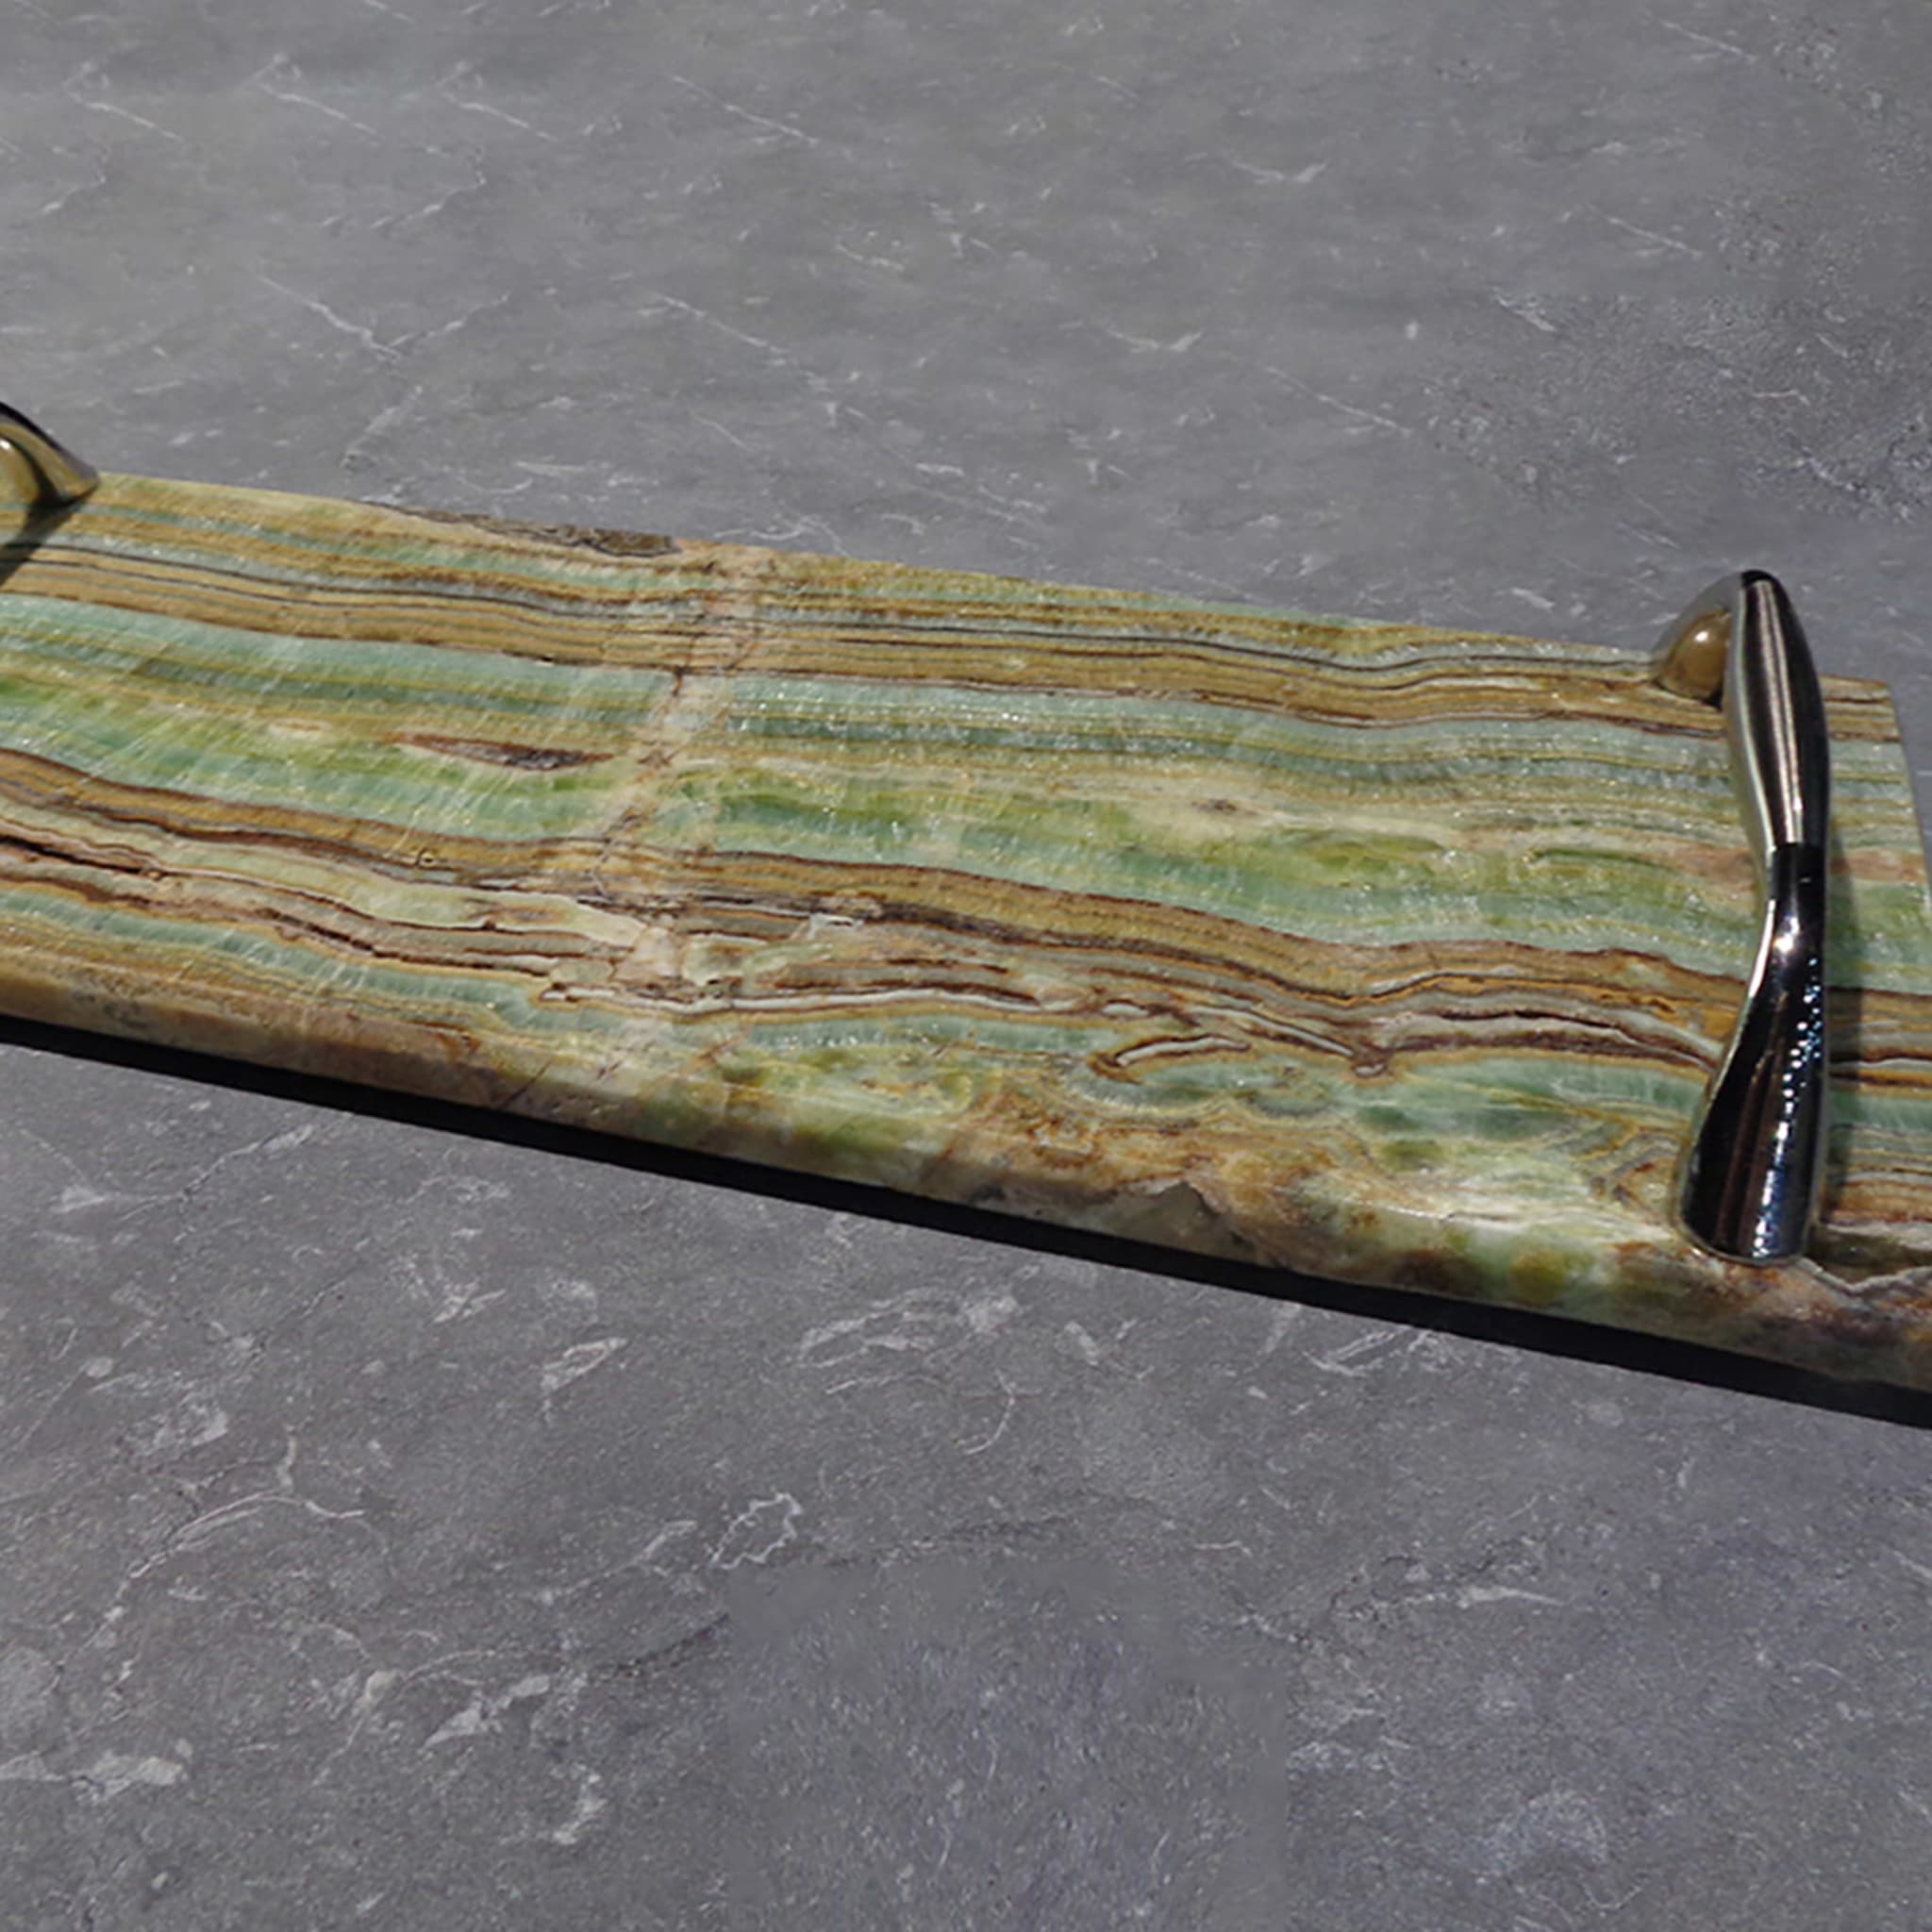 Rectangular Emerald Onyx Tray with Steel Handles #2 - Alternative view 2